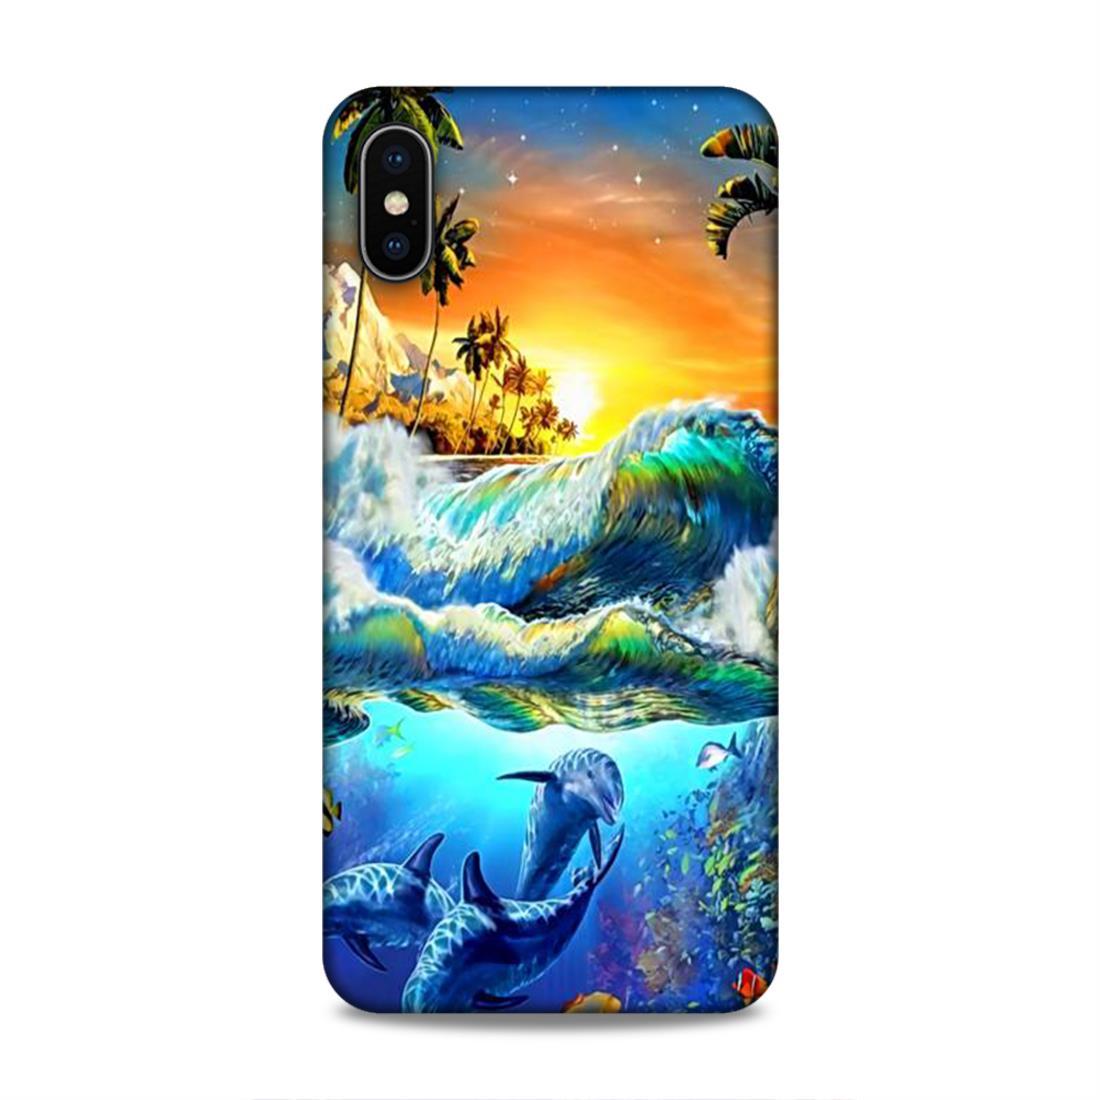 Sunrise Art iPhone XS Max Phone Cover Case